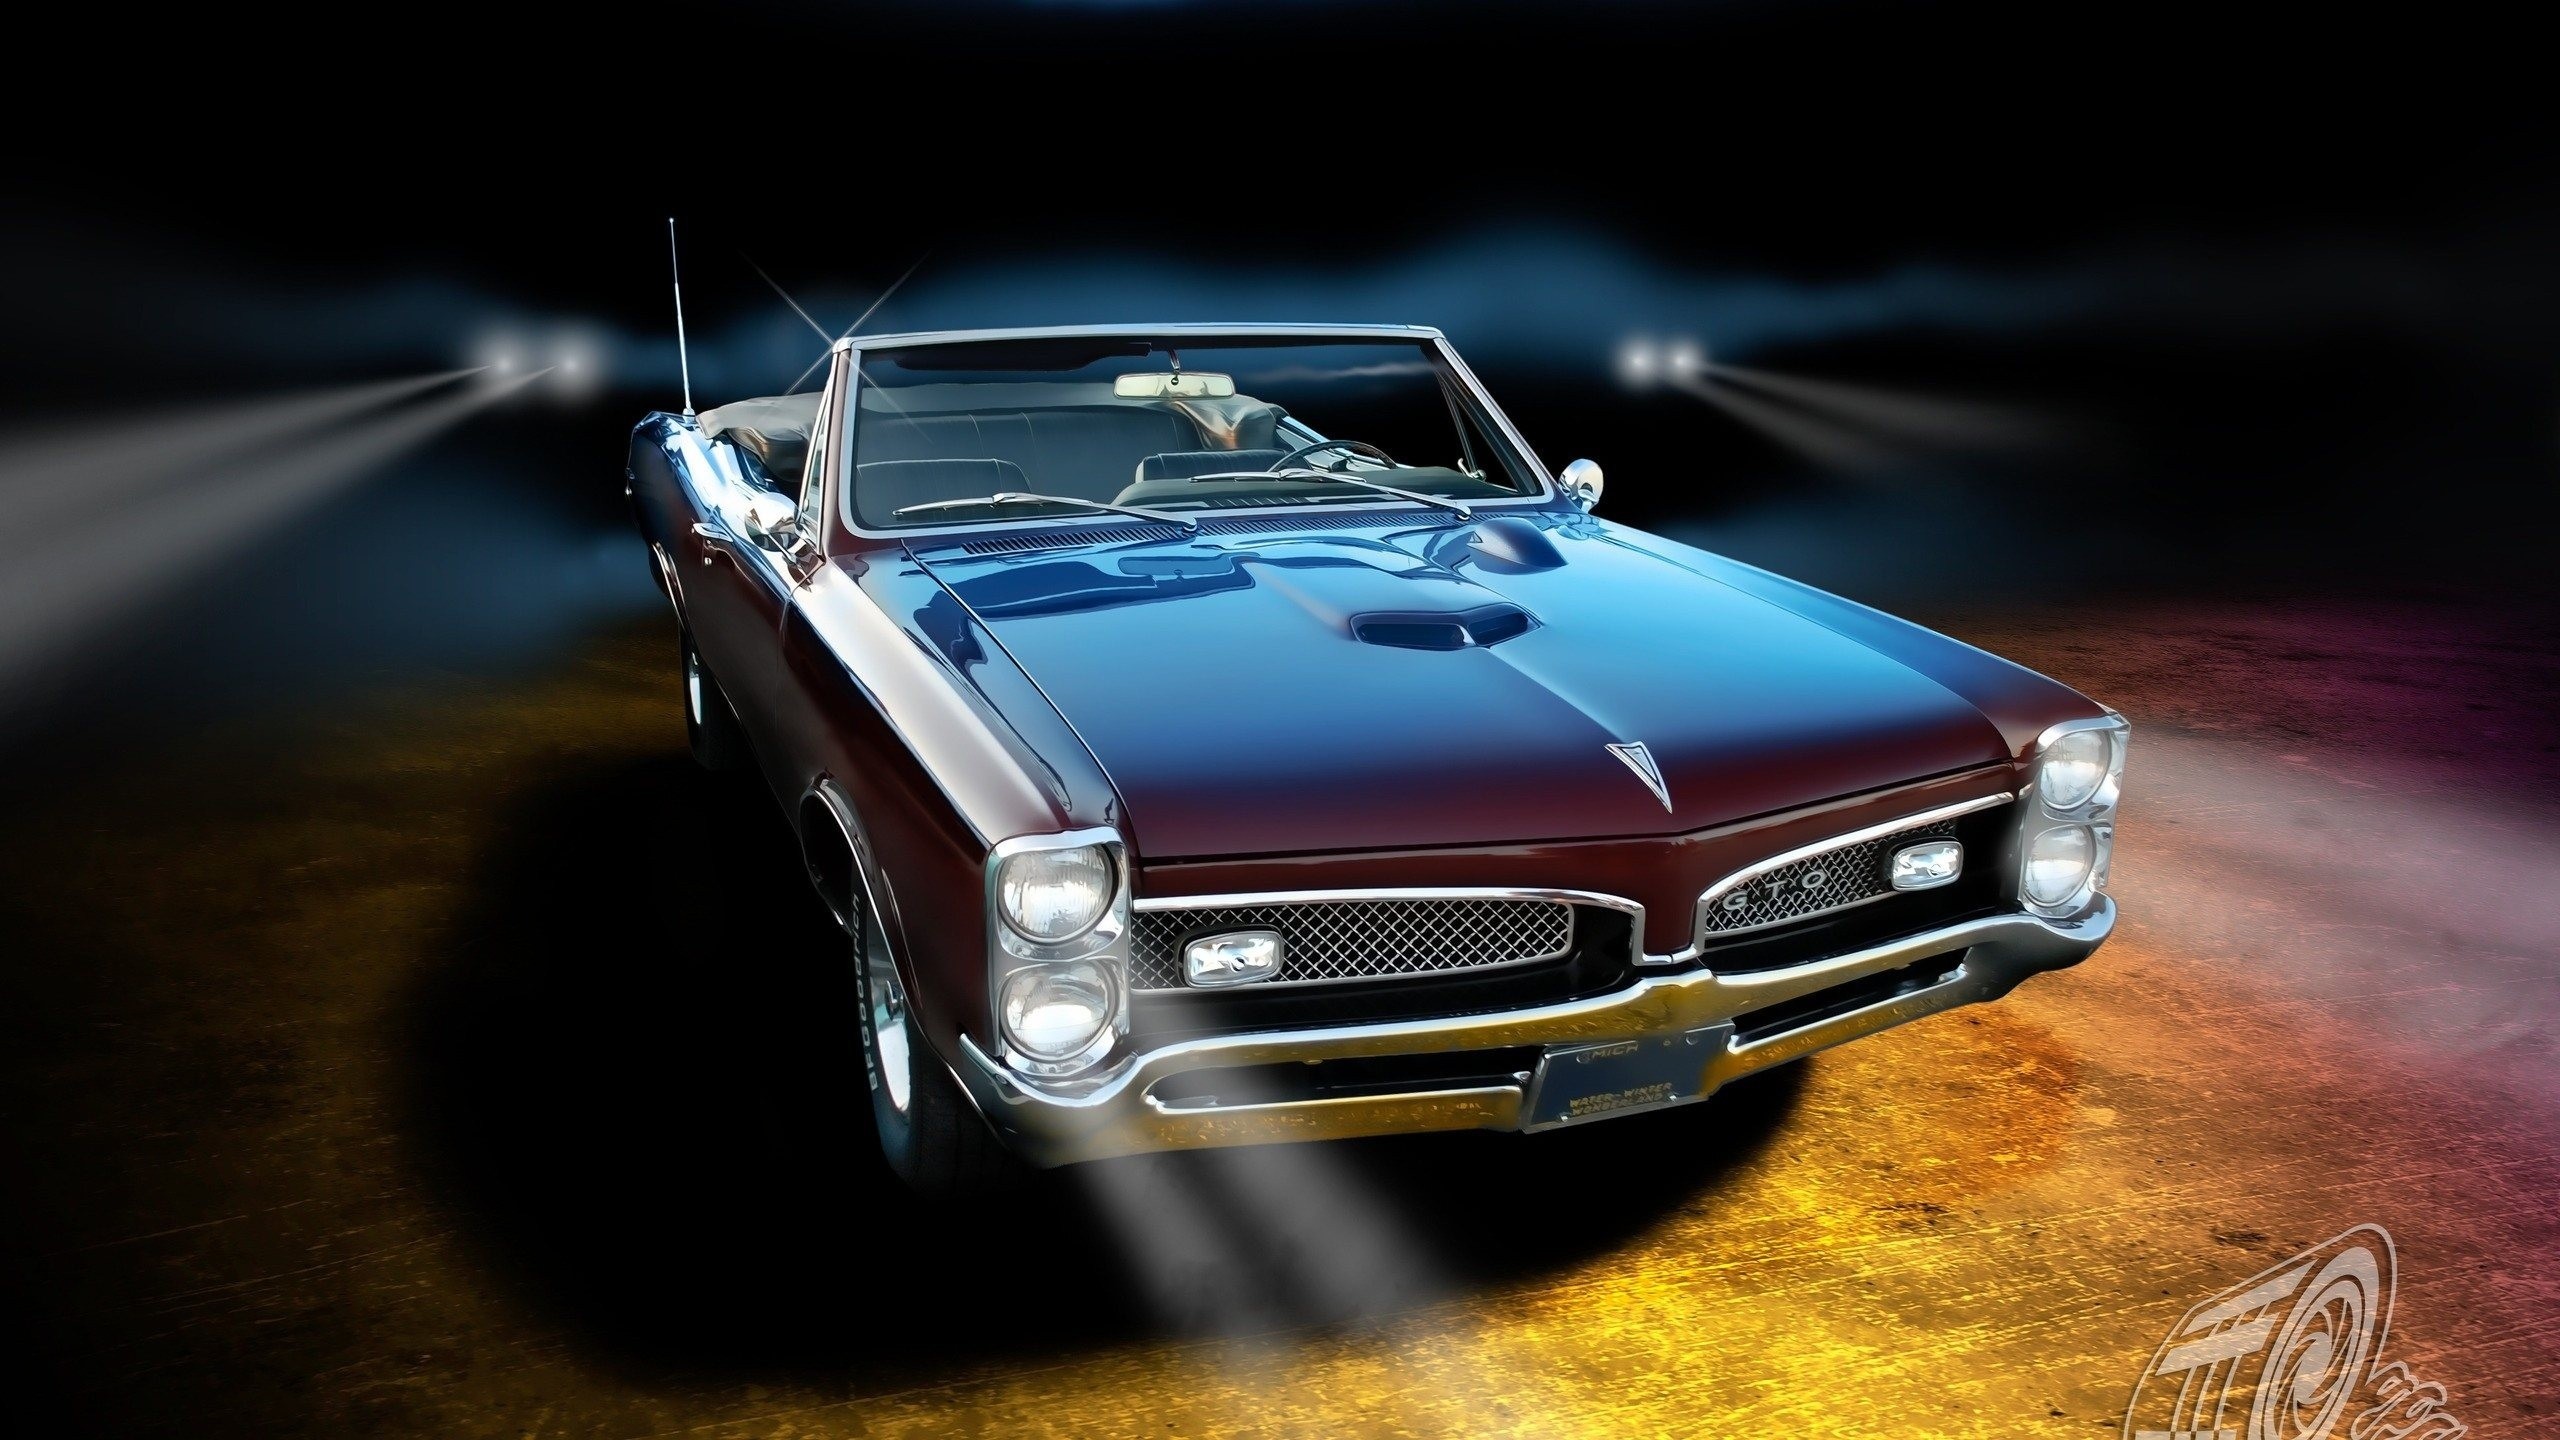 2560x1440 Cool Classic Car Wallpaper | HD Widescreen Backgrounds